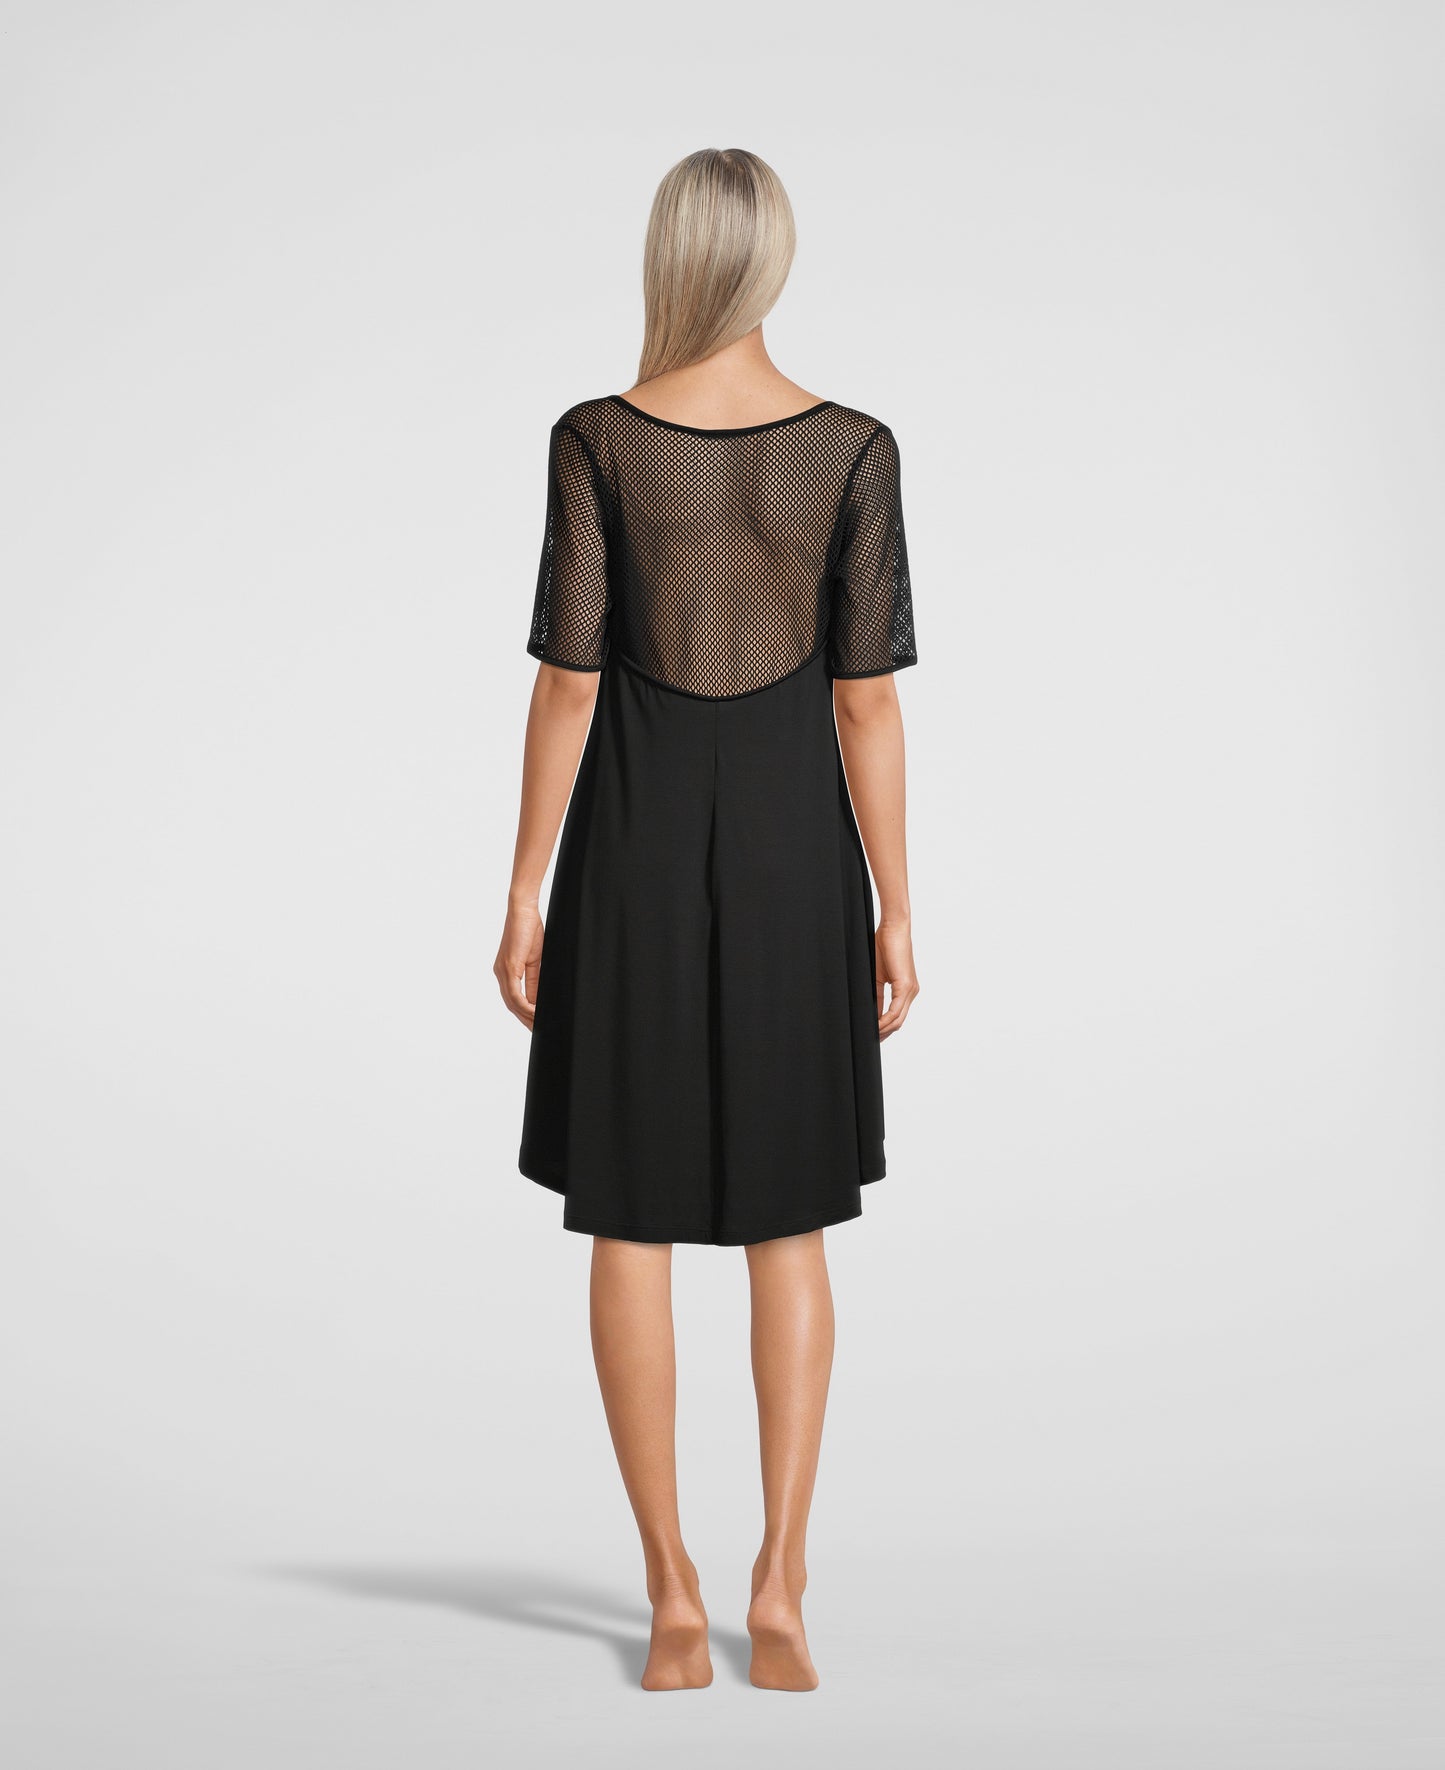 Dress Woman Modal 1408 - Oscalito